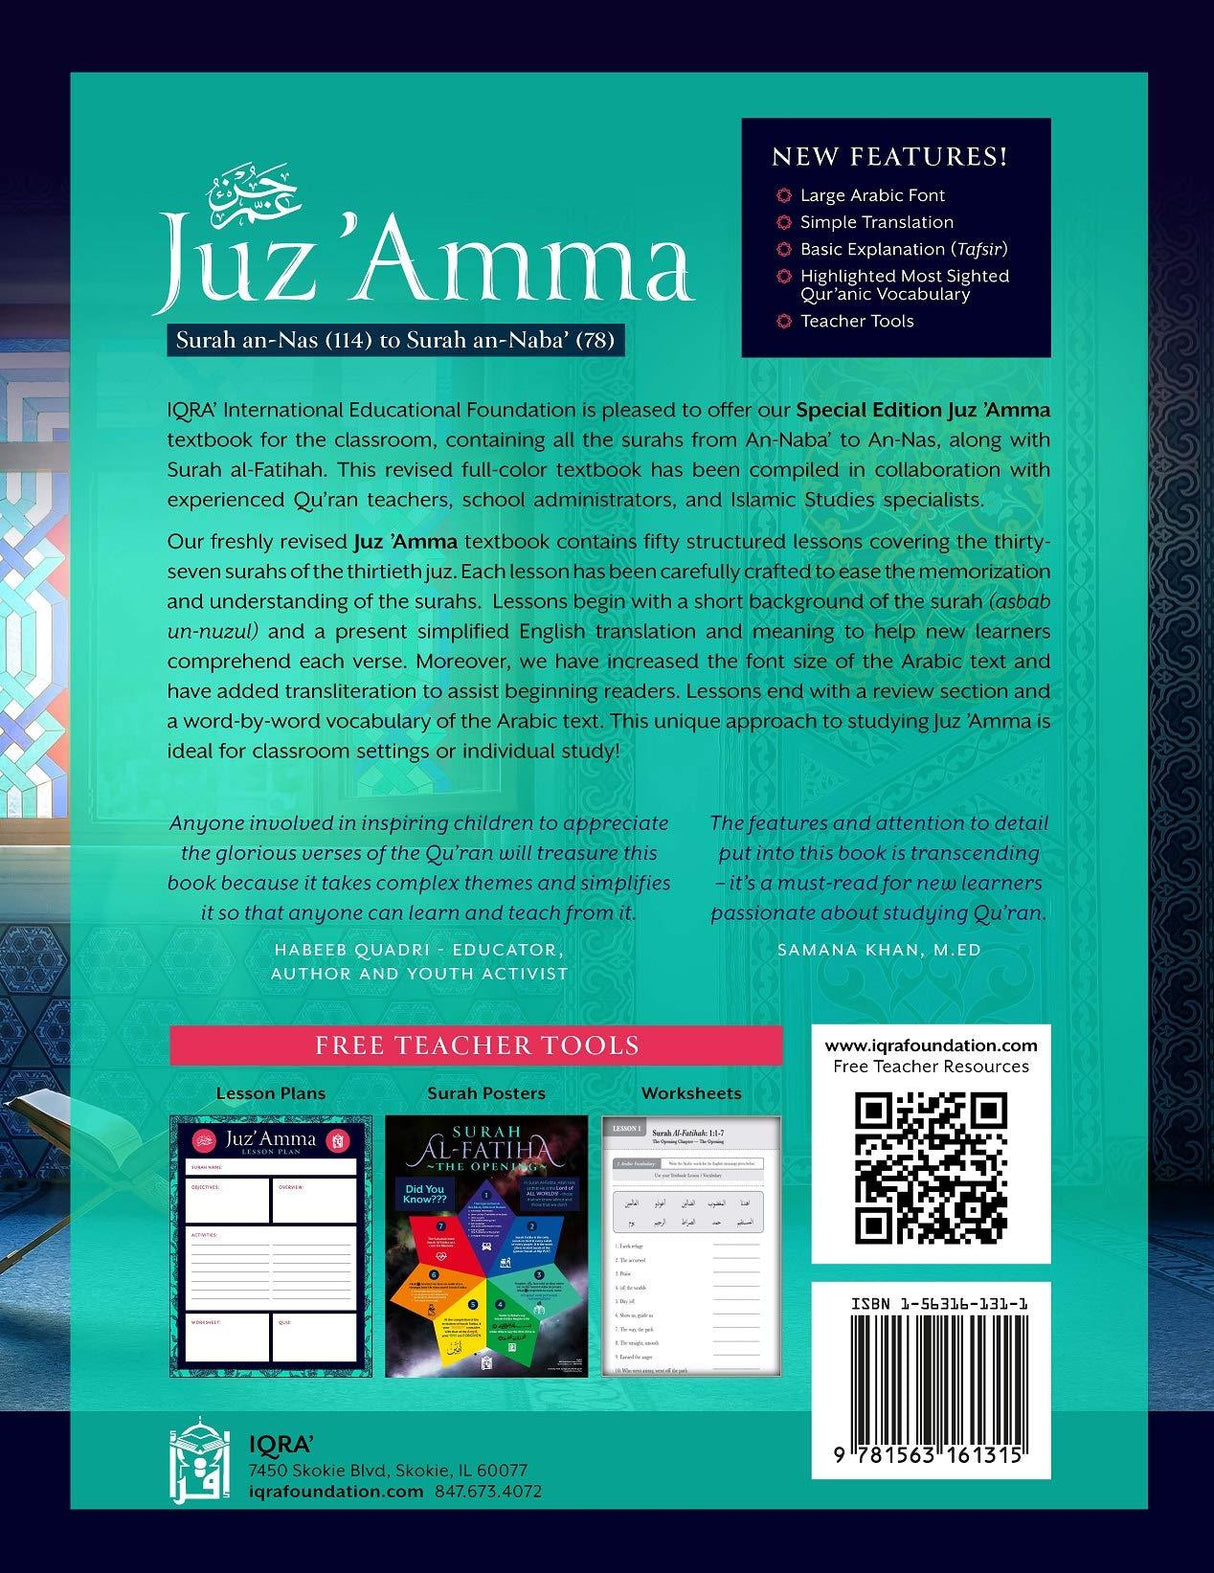 Juz' Amma For The Classroom: Textbook